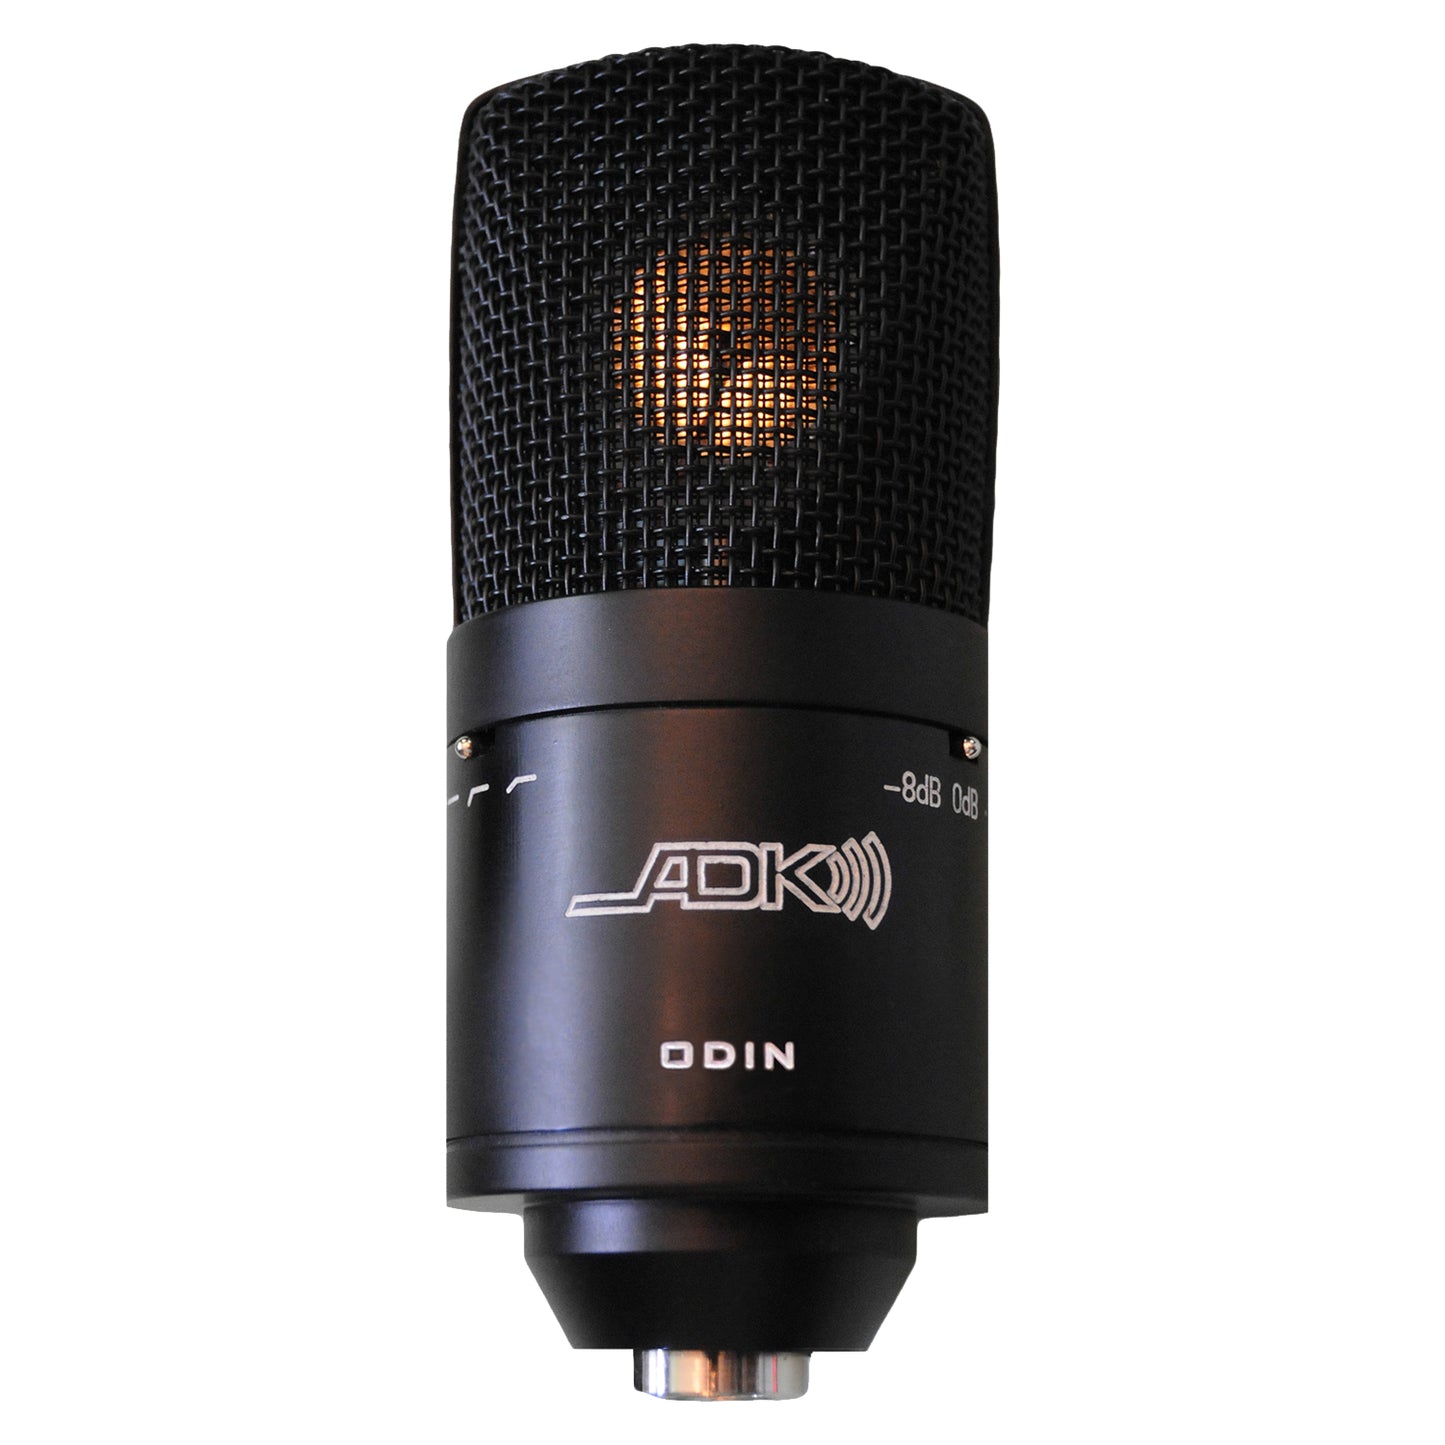 ADK Odin Condenser Microphone